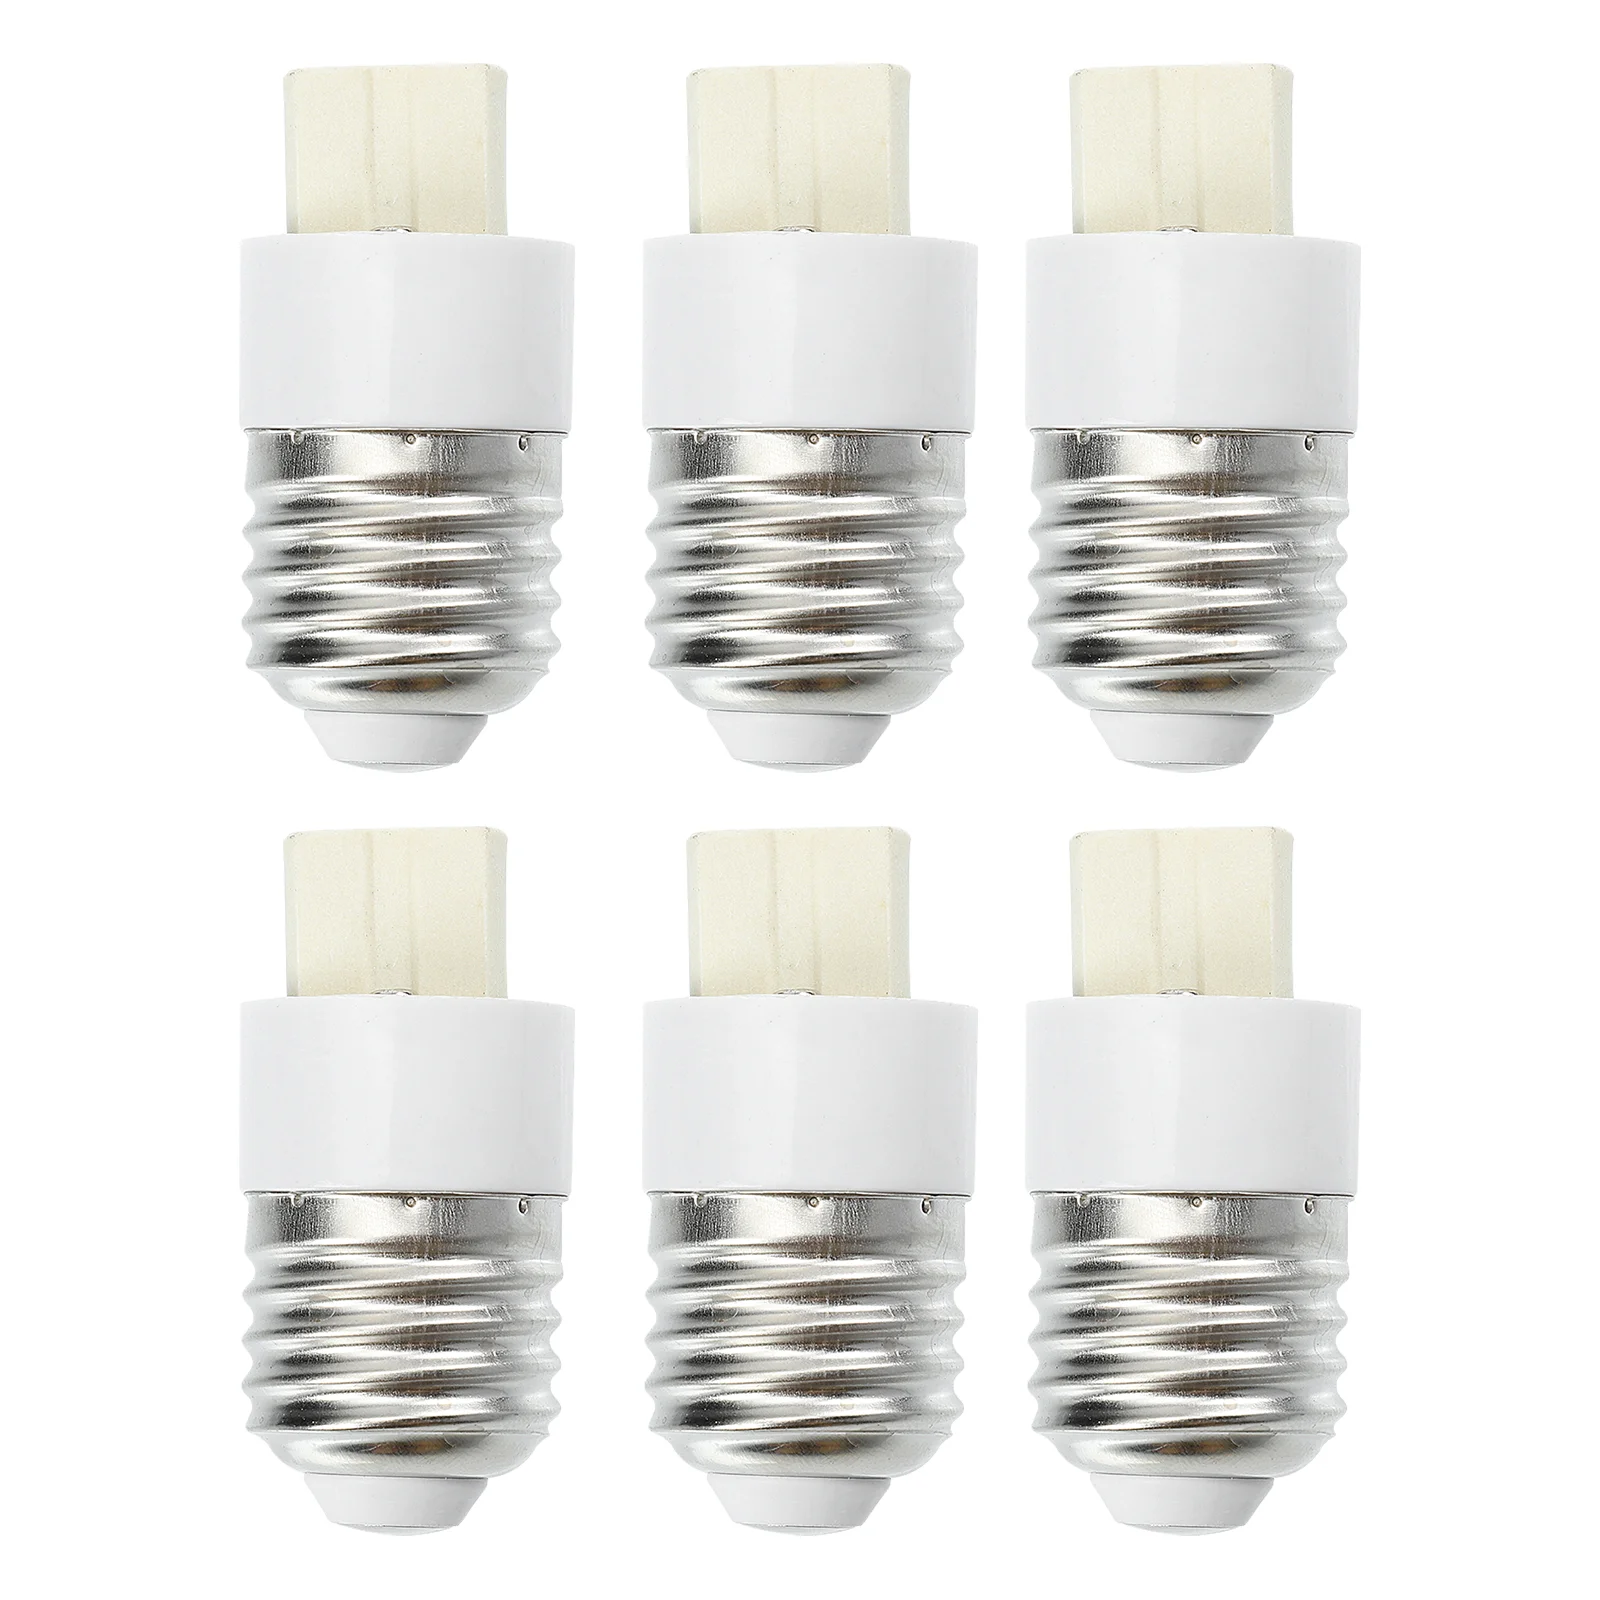 

Adapter Light Lamp Bulb Socket Converter Holder G9 Base E27 Converters Adapters Lights Plug Splitter Mogul Outlet Candelabra Led